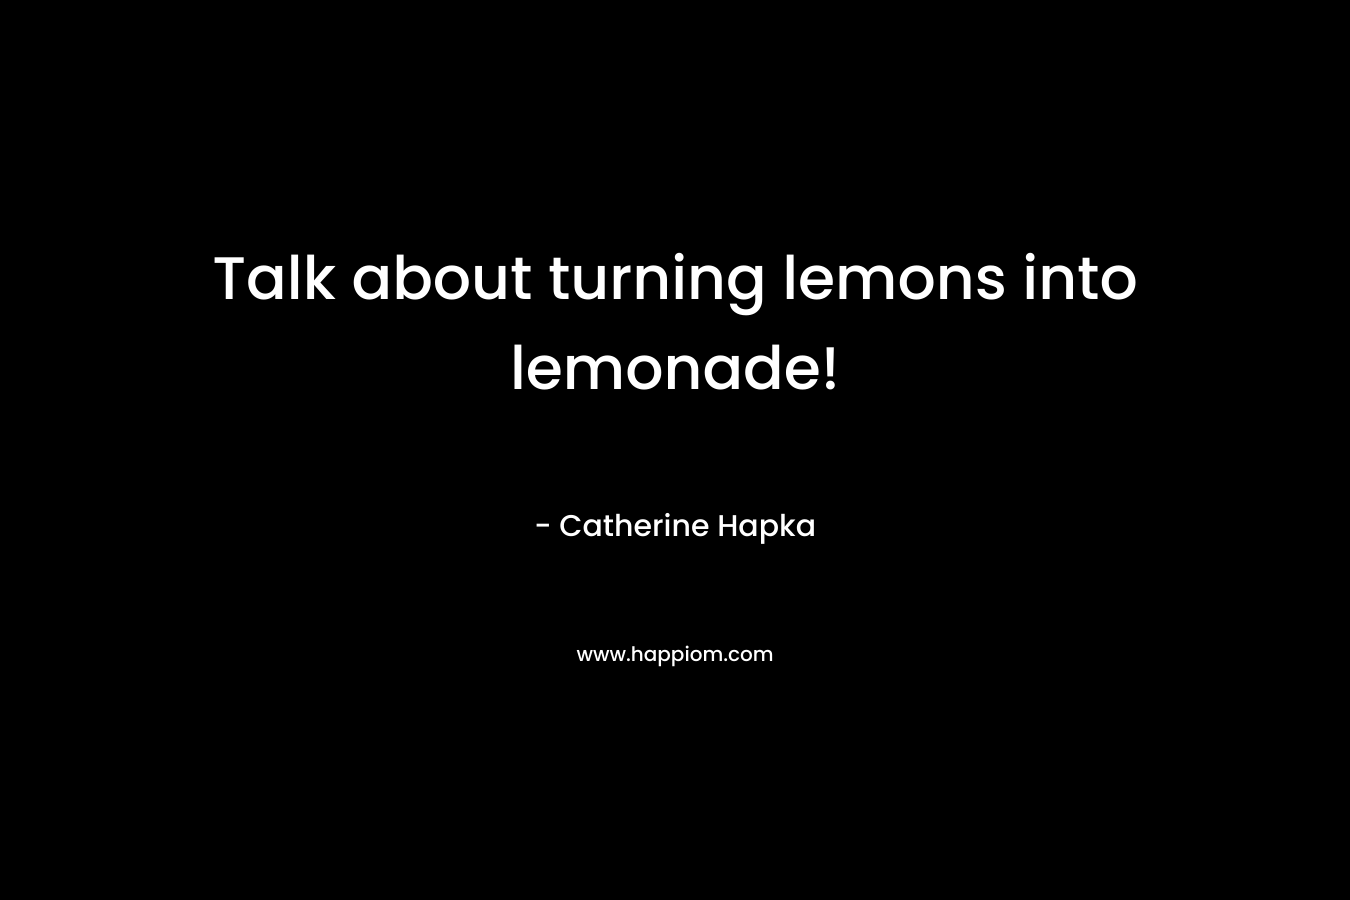 Talk about turning lemons into lemonade!